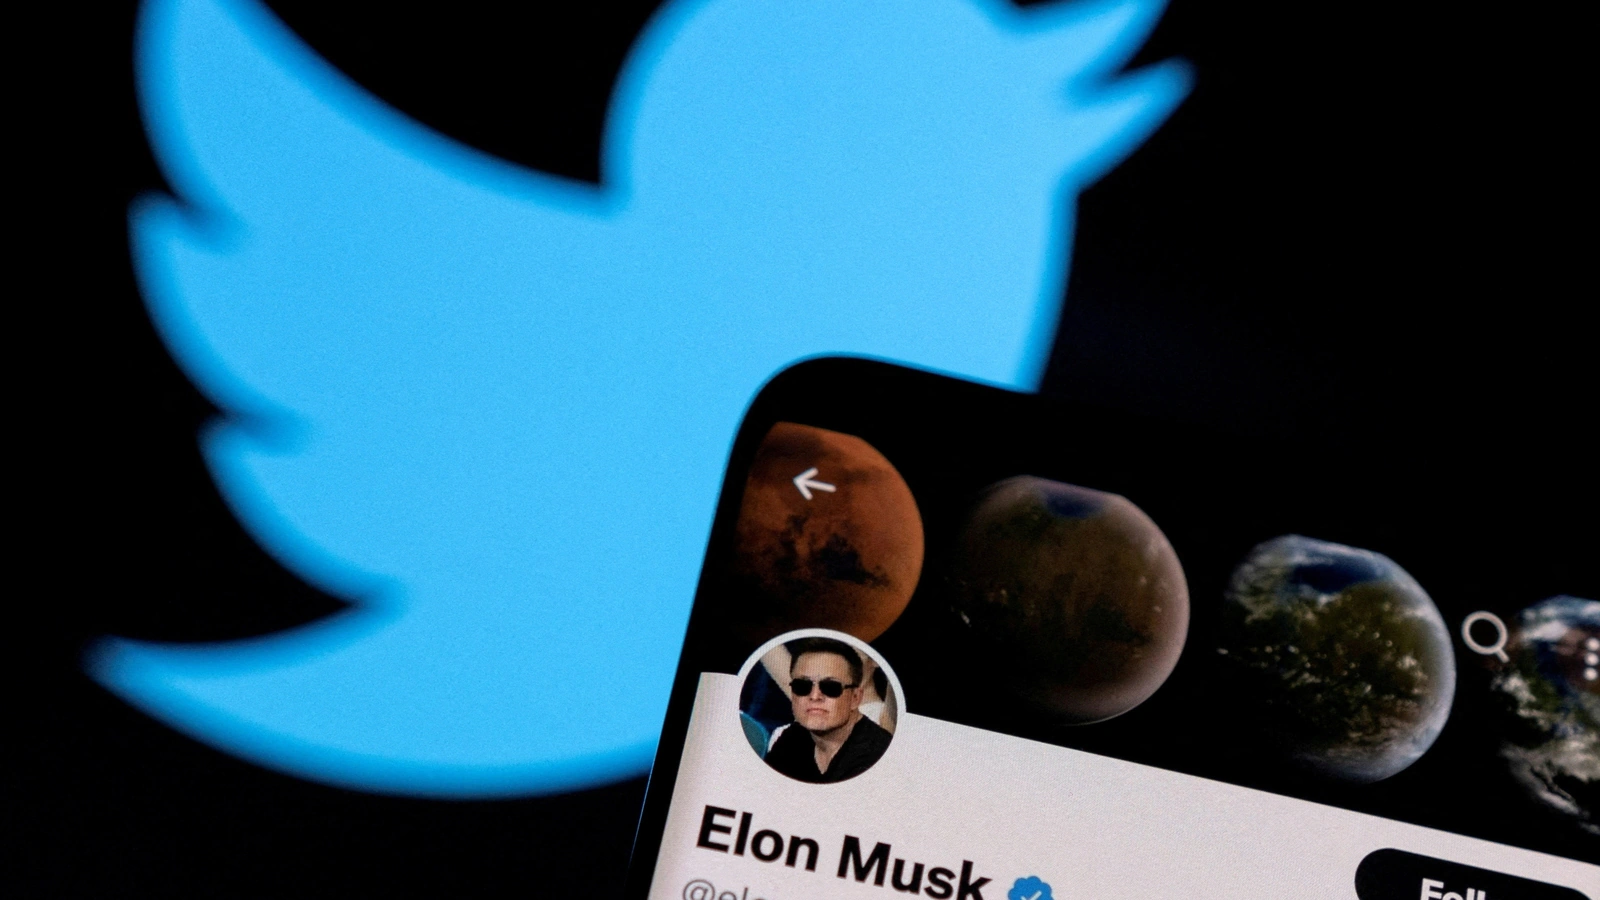 'Absurdity of notepad screenshots' to end: Elon Musk shares key Twitter update